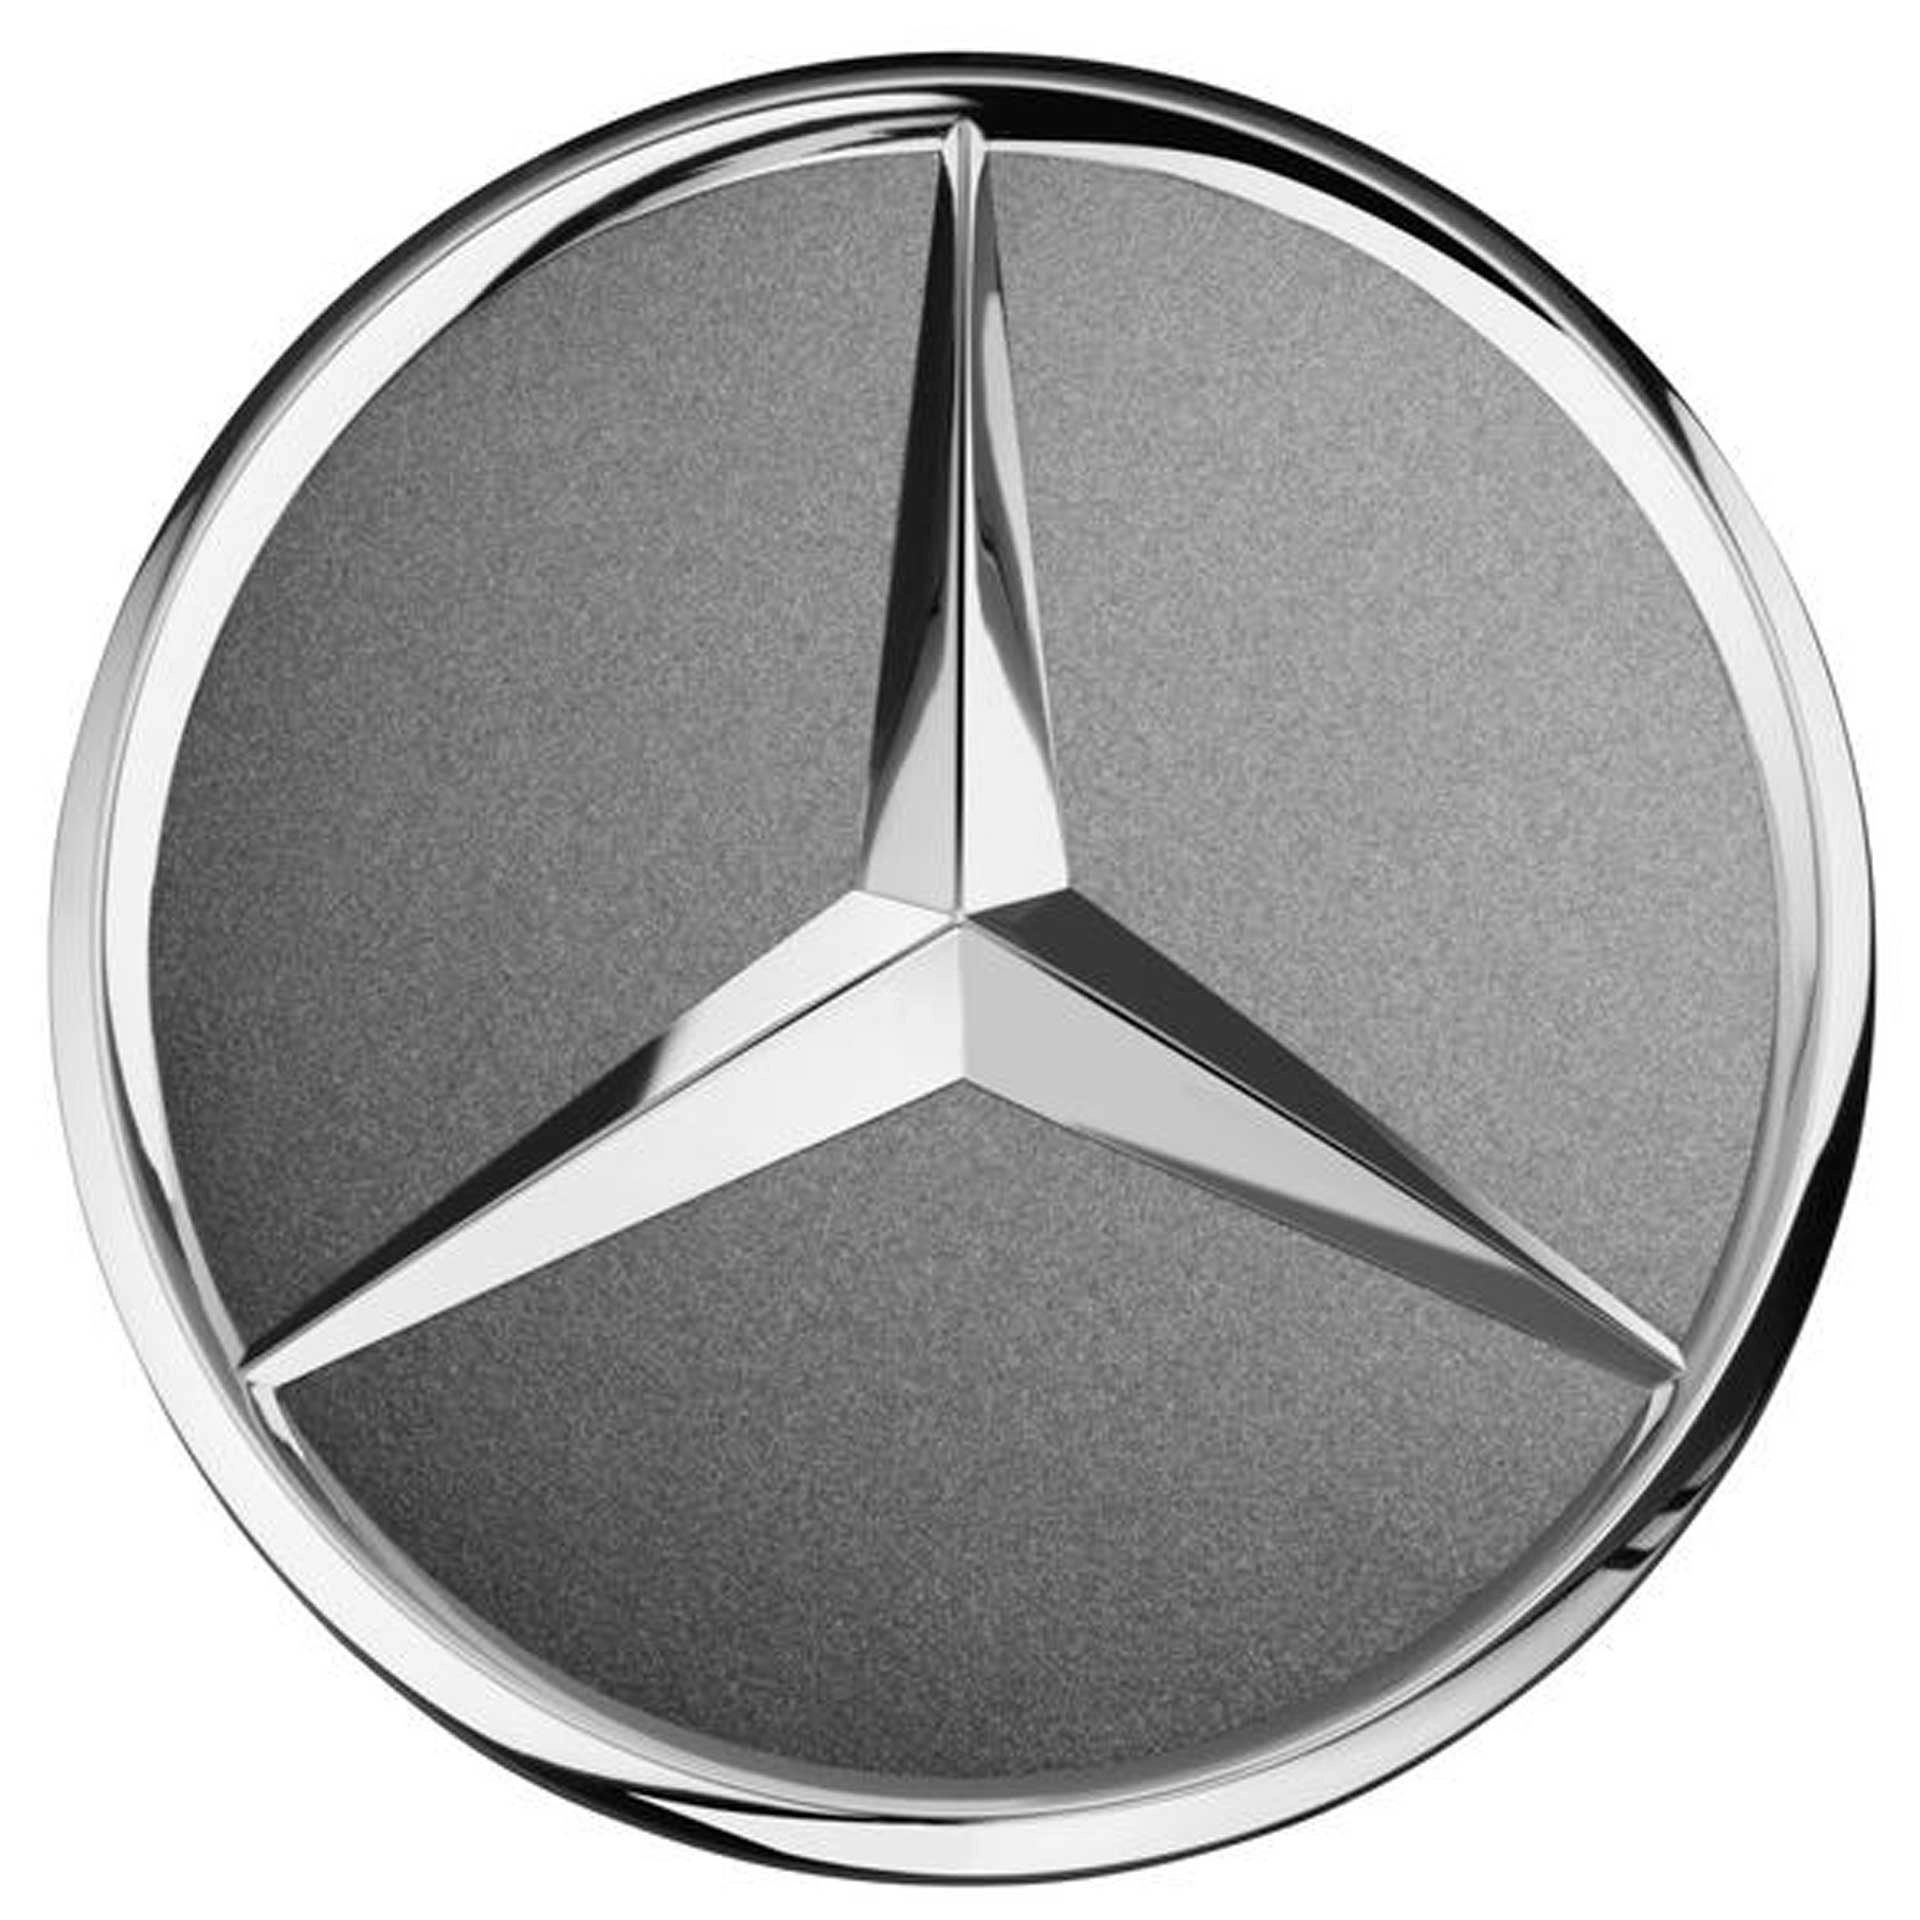 Mercedes-Benz Radnabenabdeckung Stern Himalayagrau